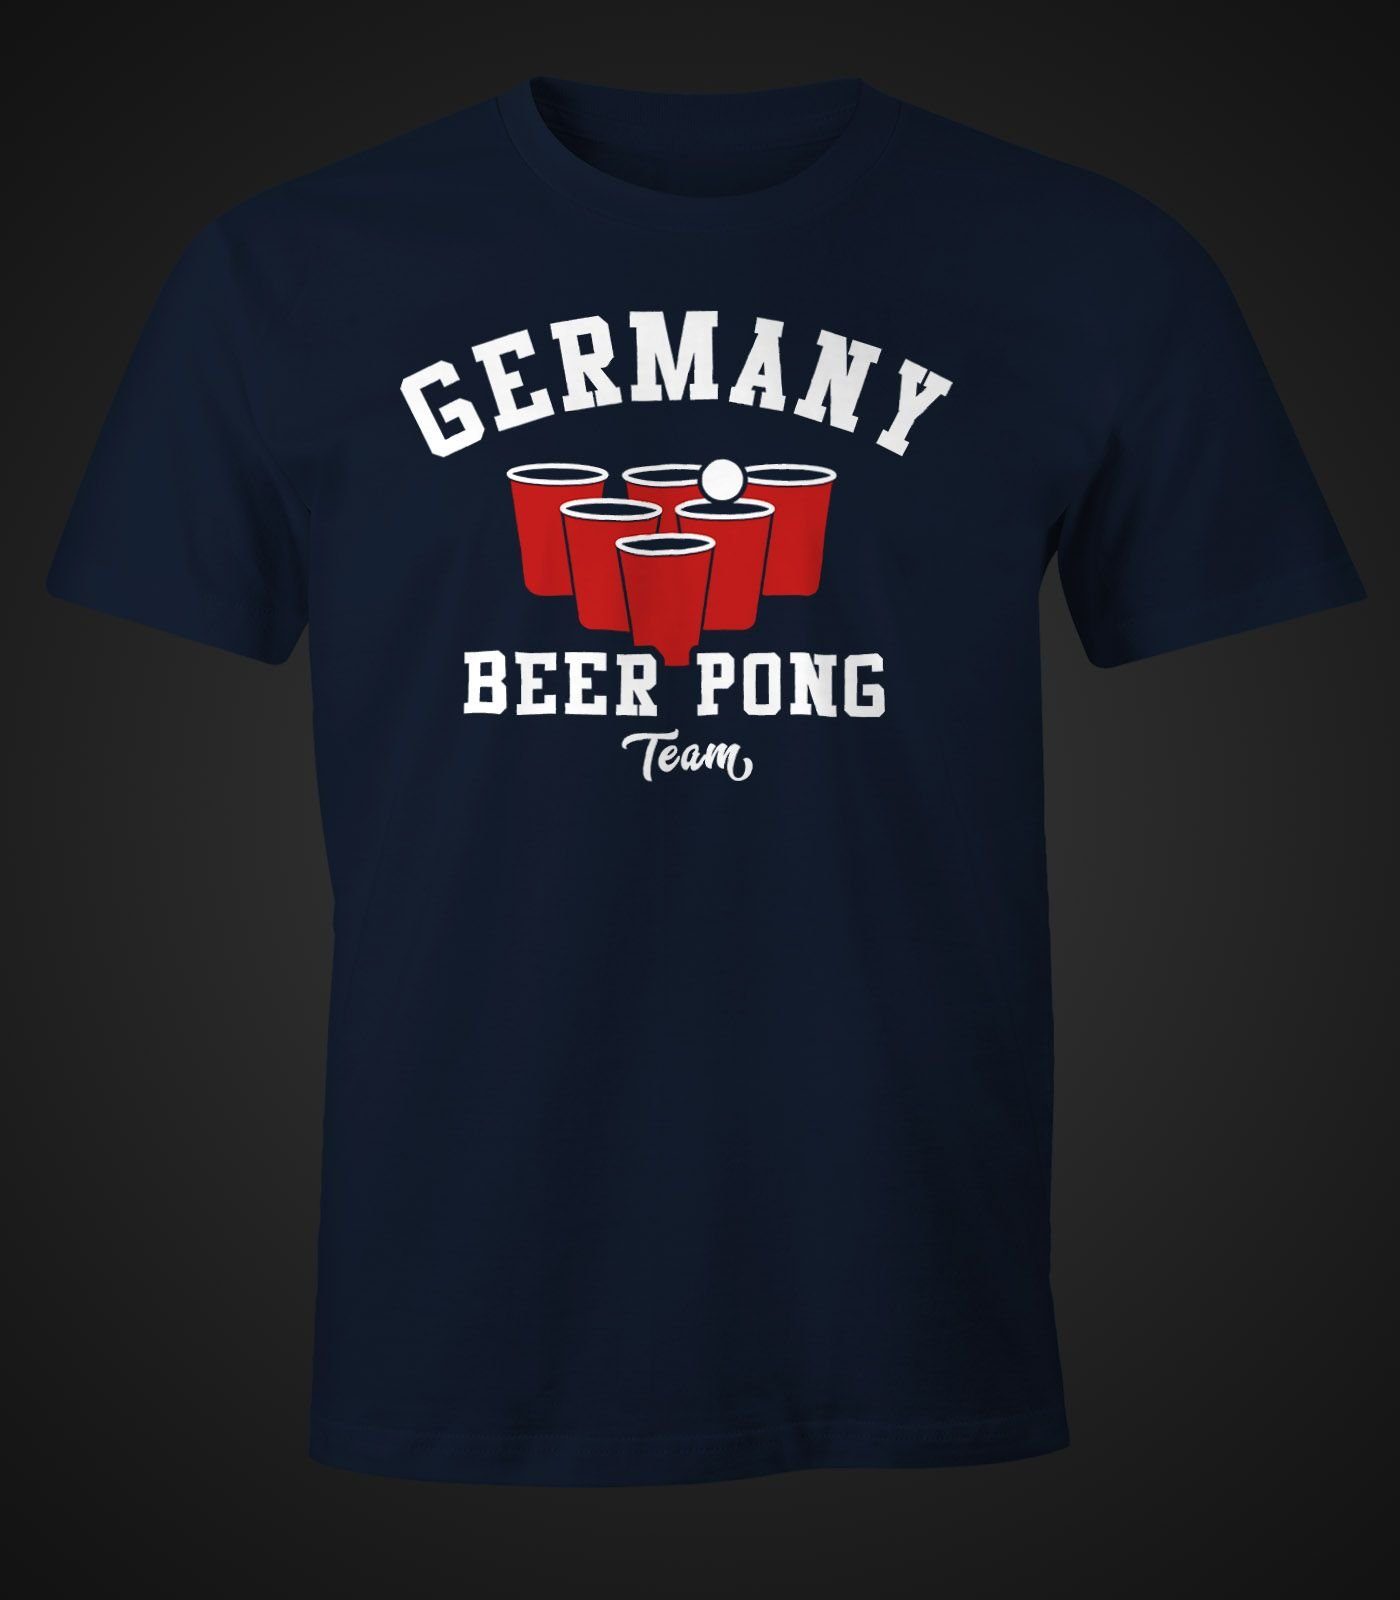 MoonWorks Print-Shirt Herren T-Shirt Fun-Shirt Print Moonworks® Pong Beer mit Germany Bier Team navy